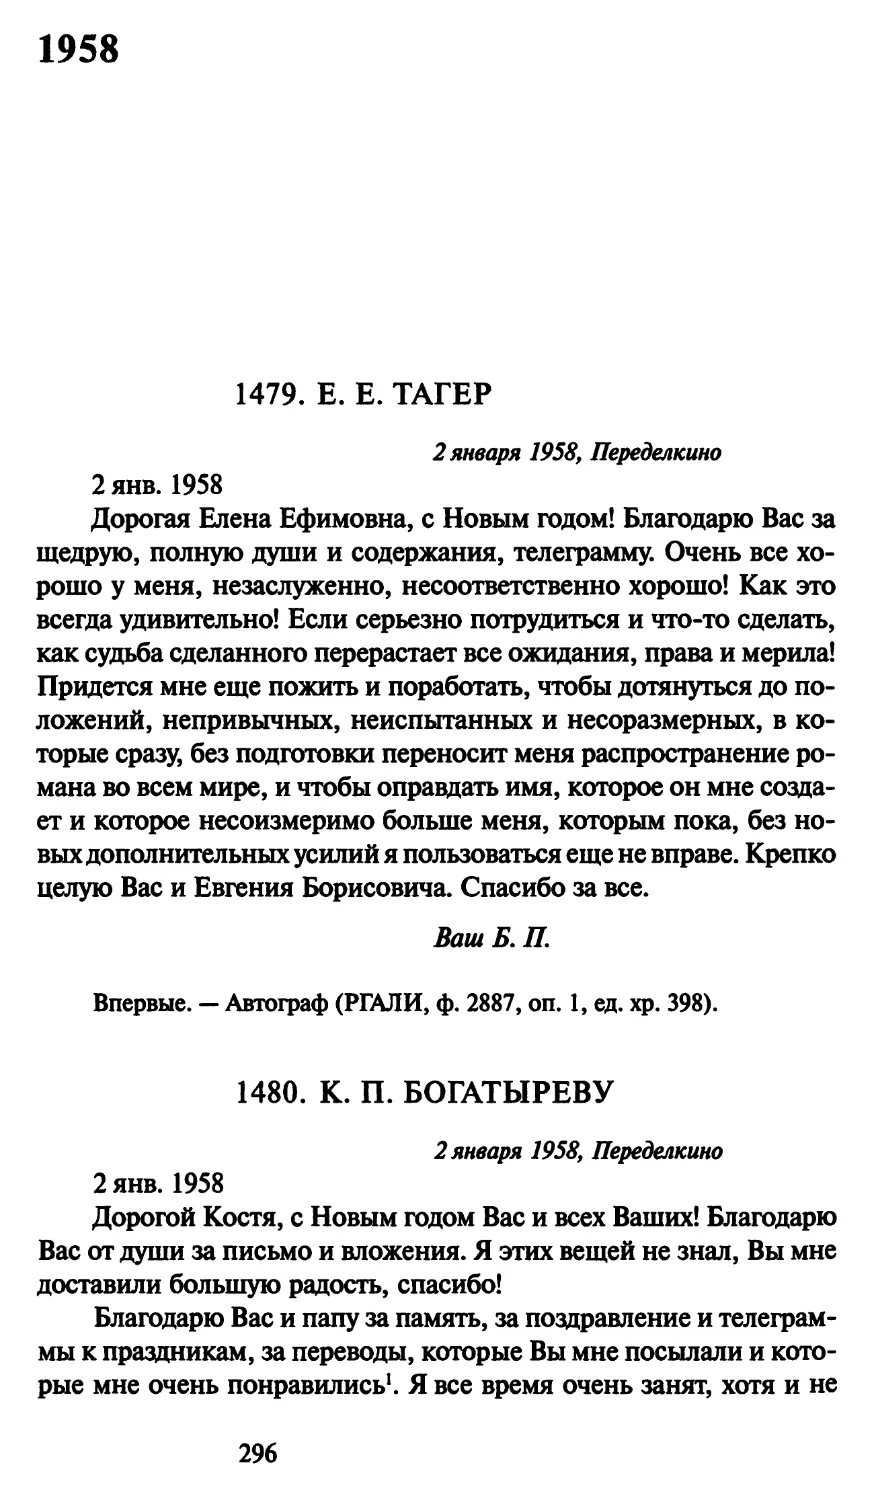 1958
1480. К. П. Богатыреву 2 января 1958